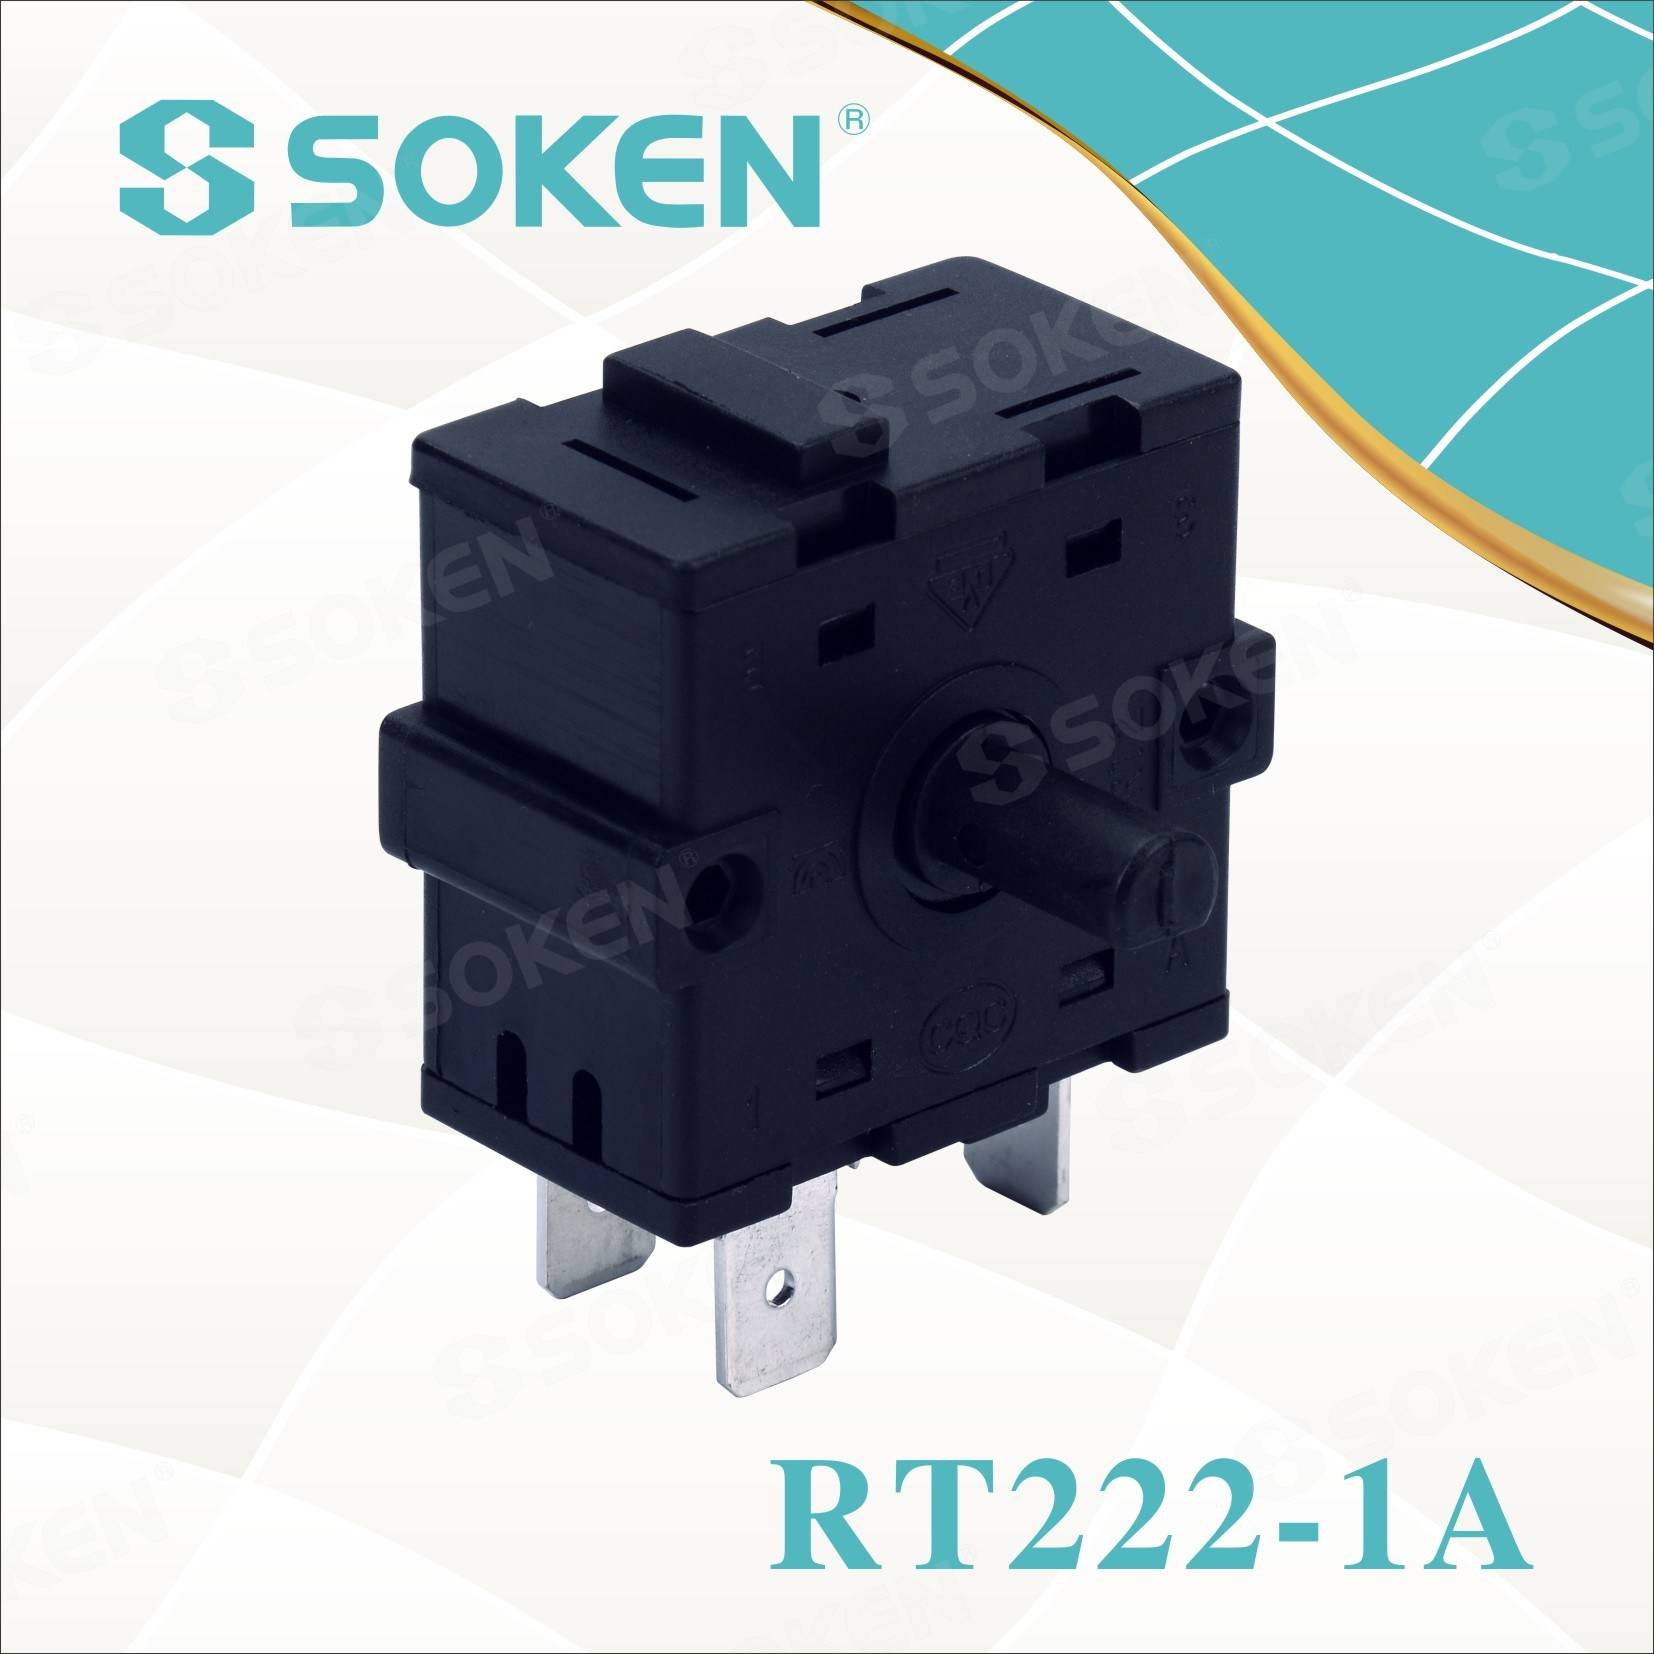 Well-designed Blue Illuminated Rocker Switch -
 Soken Rotary Switch – Master Soken Electrical